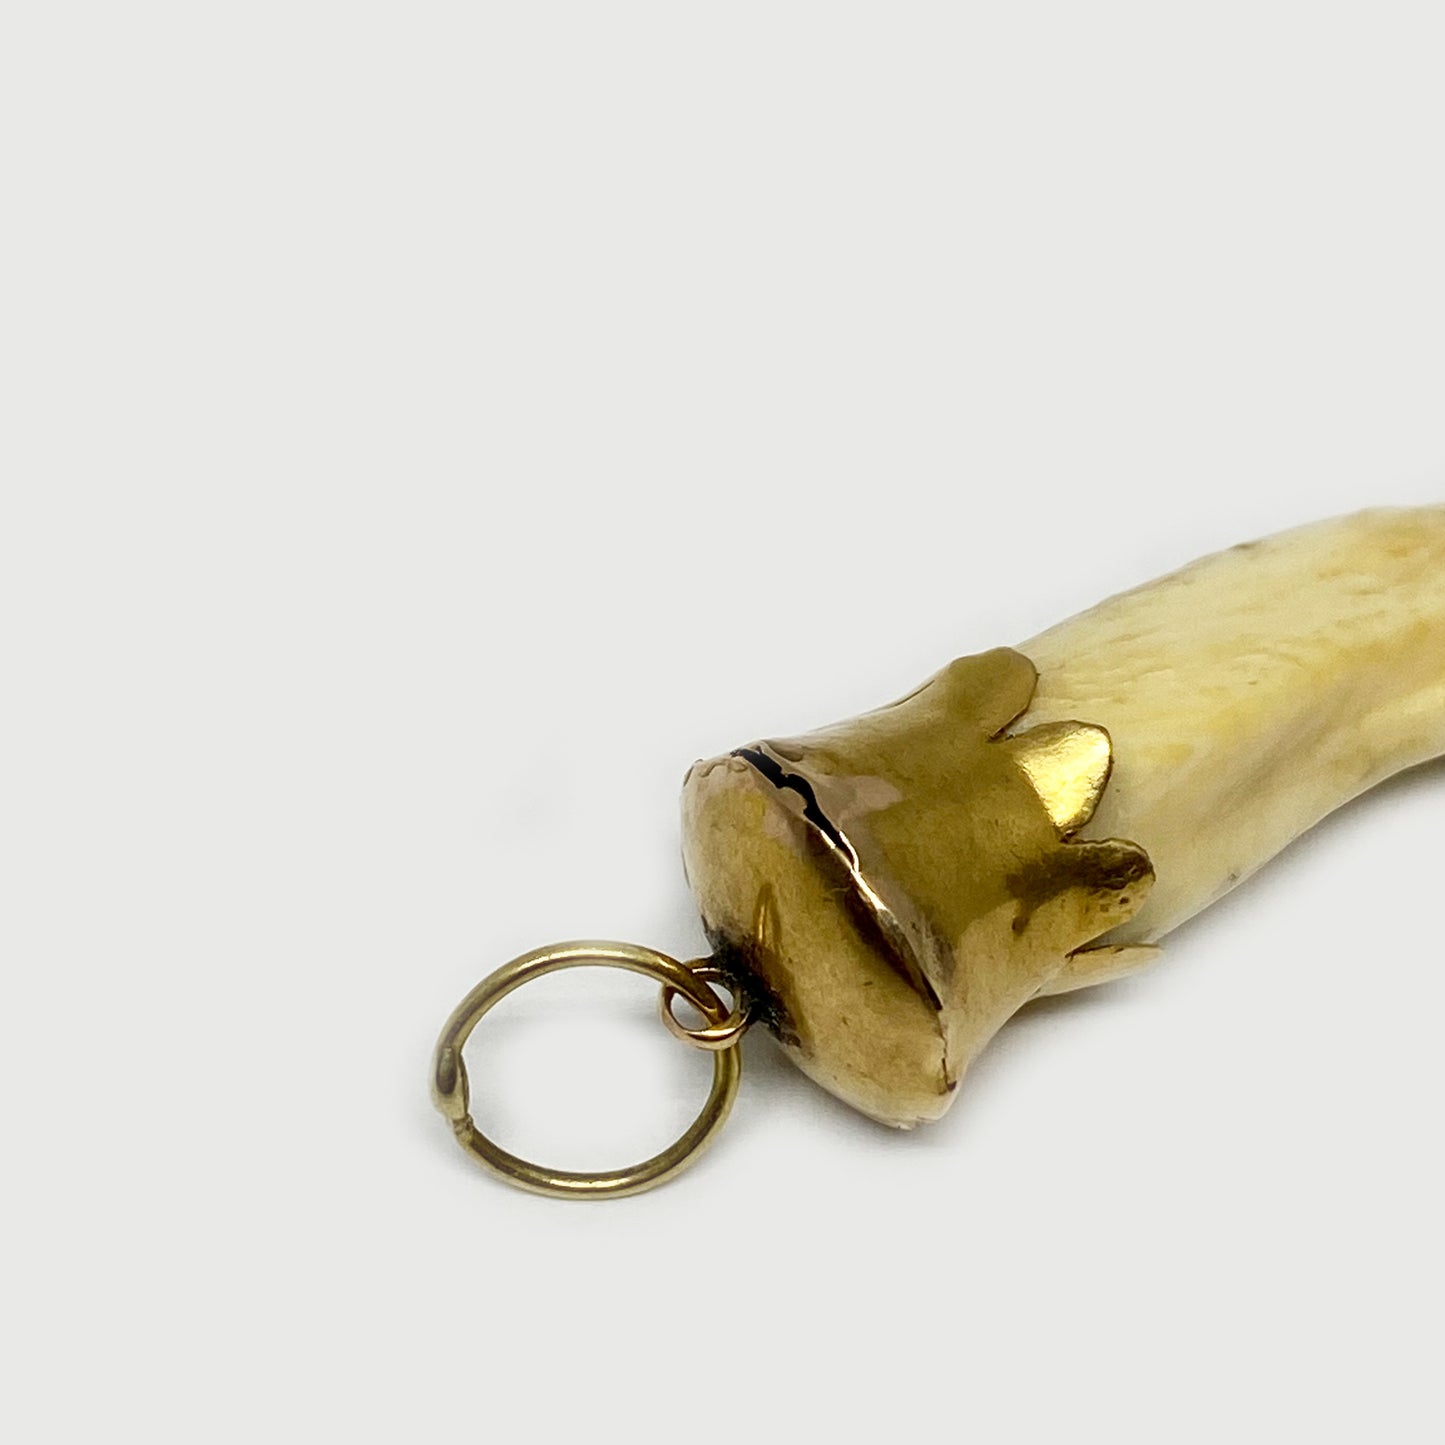 Antique 14K Gold Bone Leg Pendant, Victorian Figa Charm